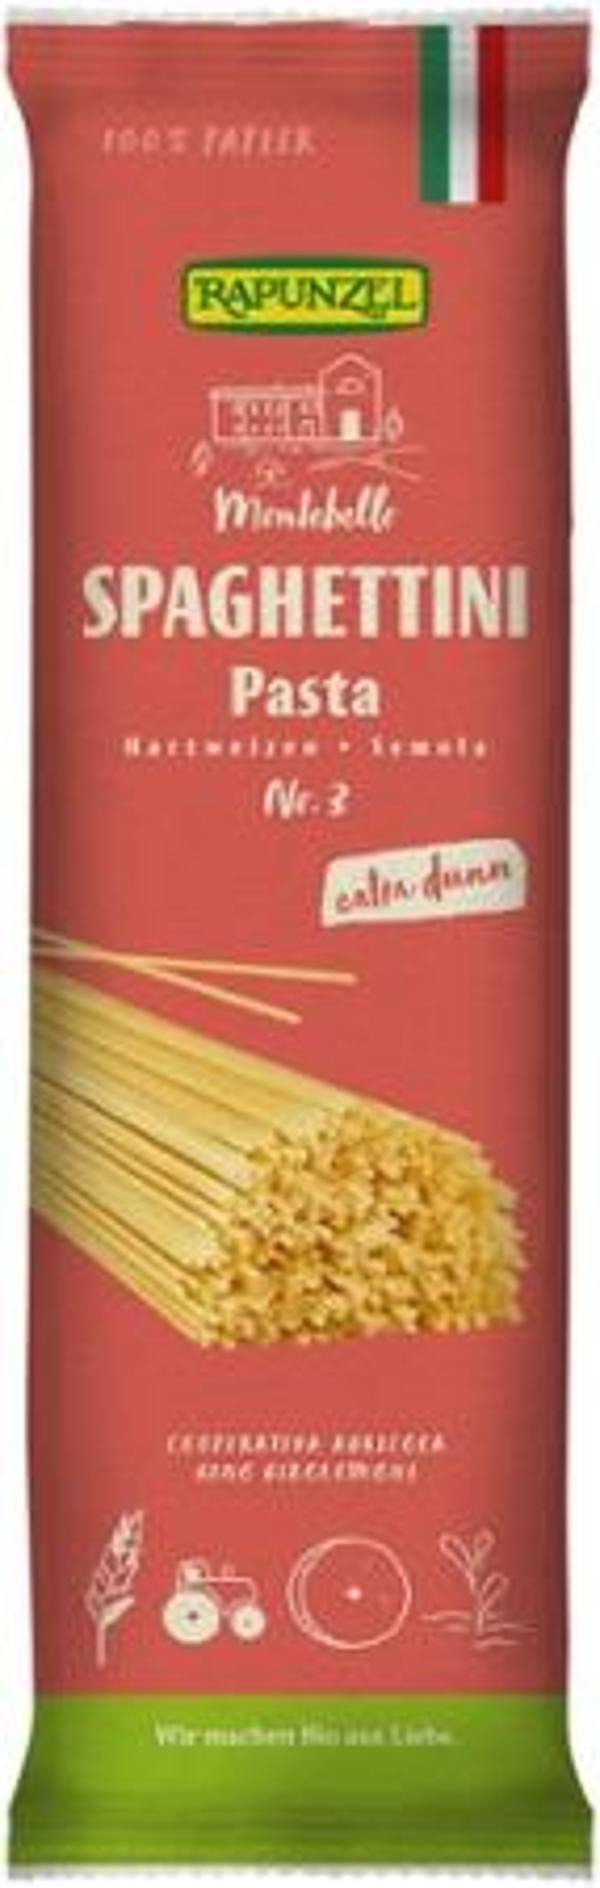 Produktfoto zu Rapunzel Spaghettini Semola